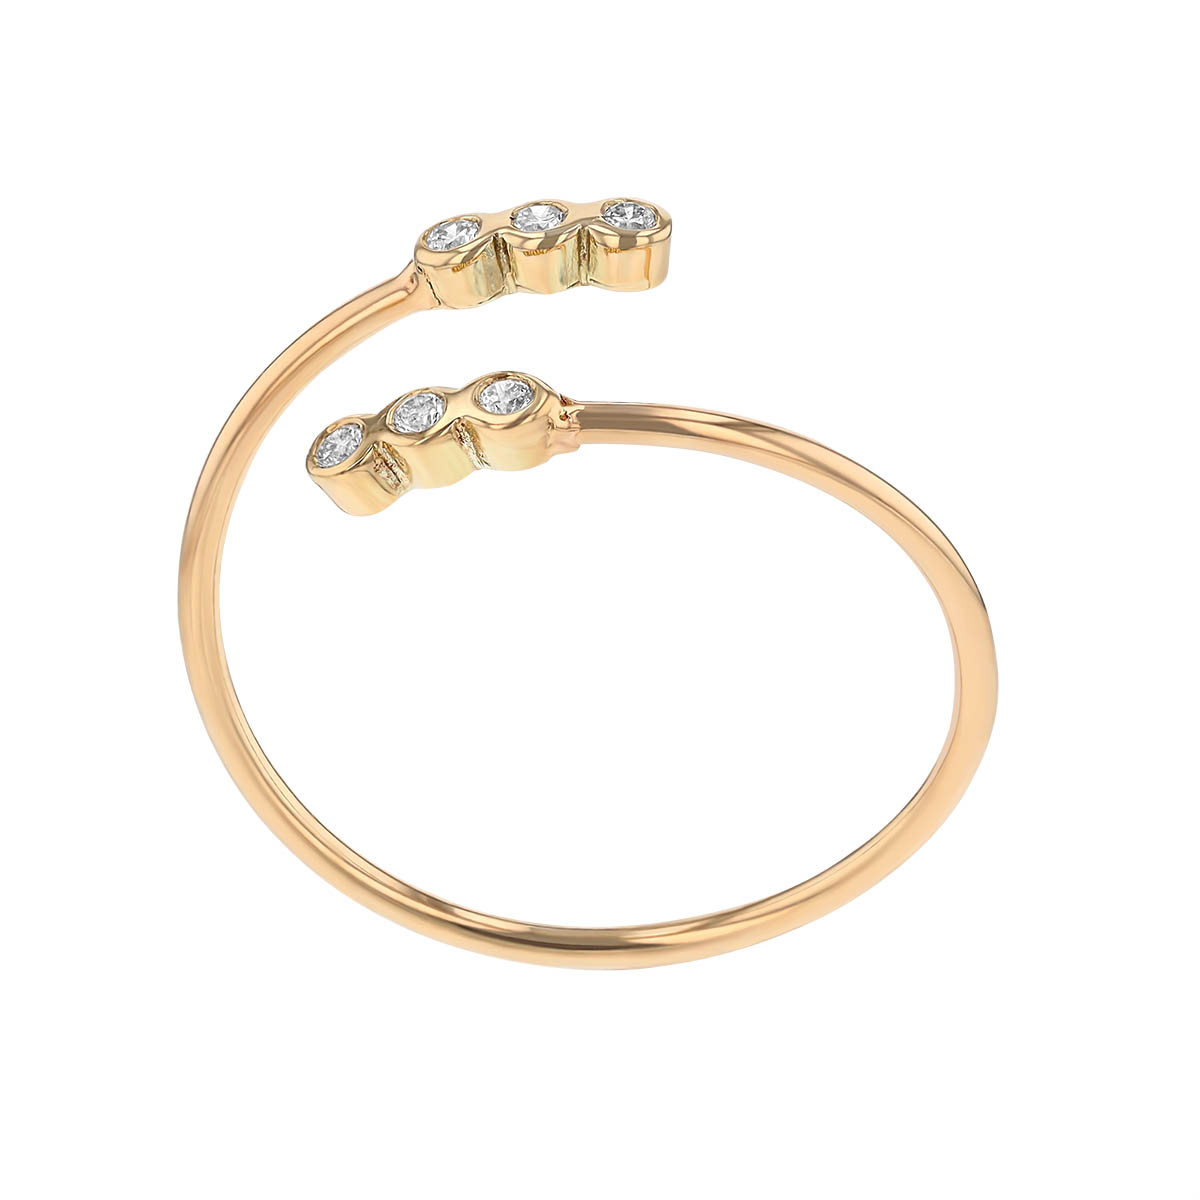 Zoe Chicco Tiny Diamond Bezel Bypass Ring in Yellow Gold | Borsheims